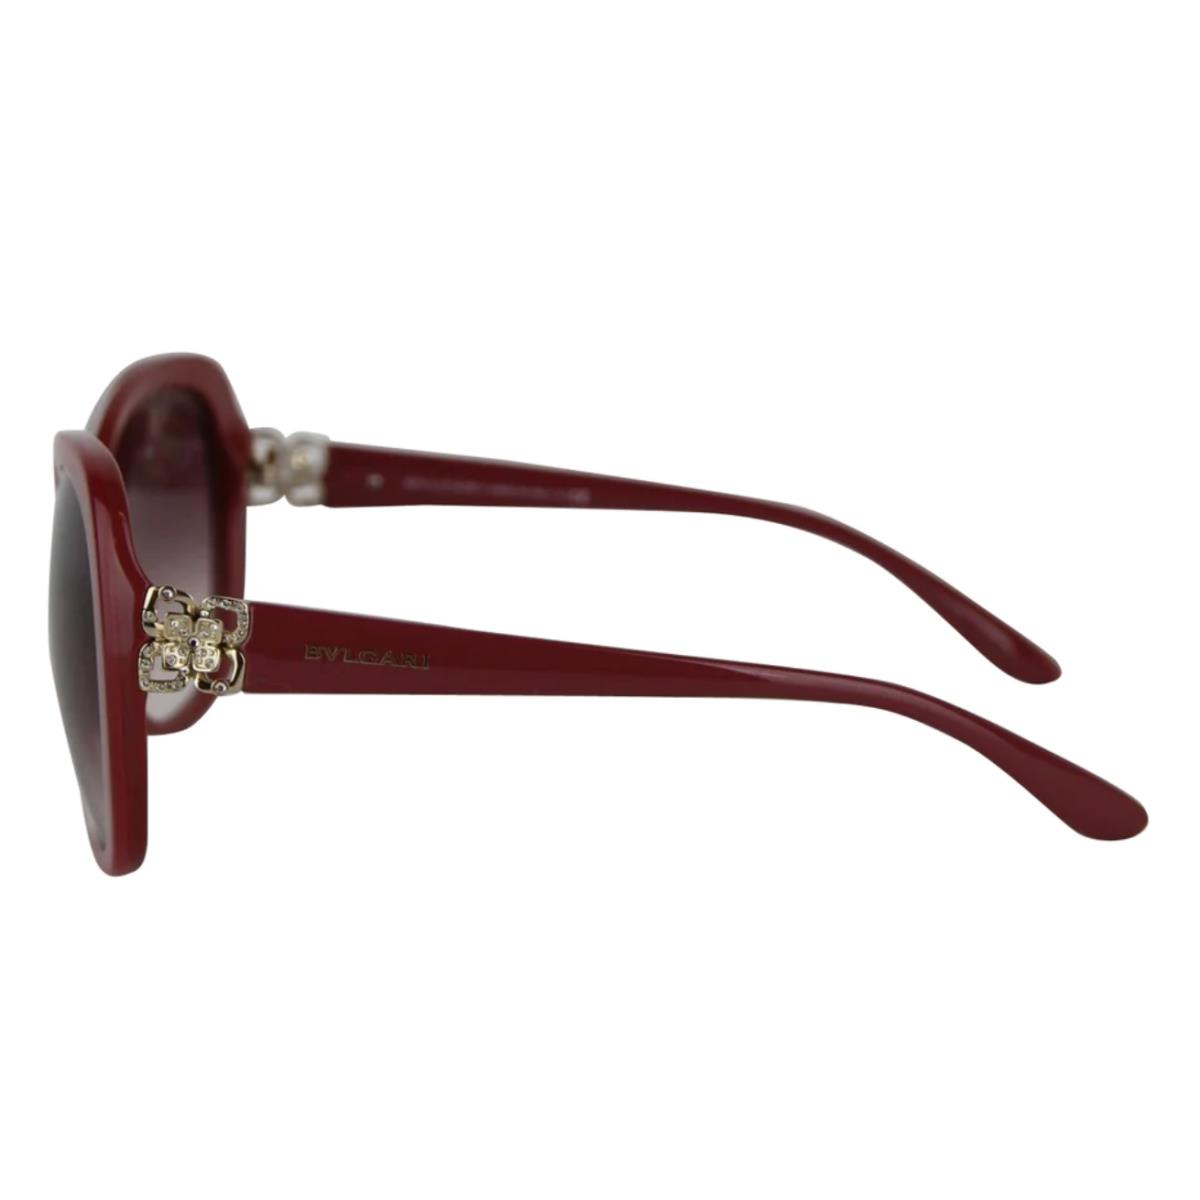 Bvlgari sunglasses  - Raspberry Frame, Violet Gradient Lens 4